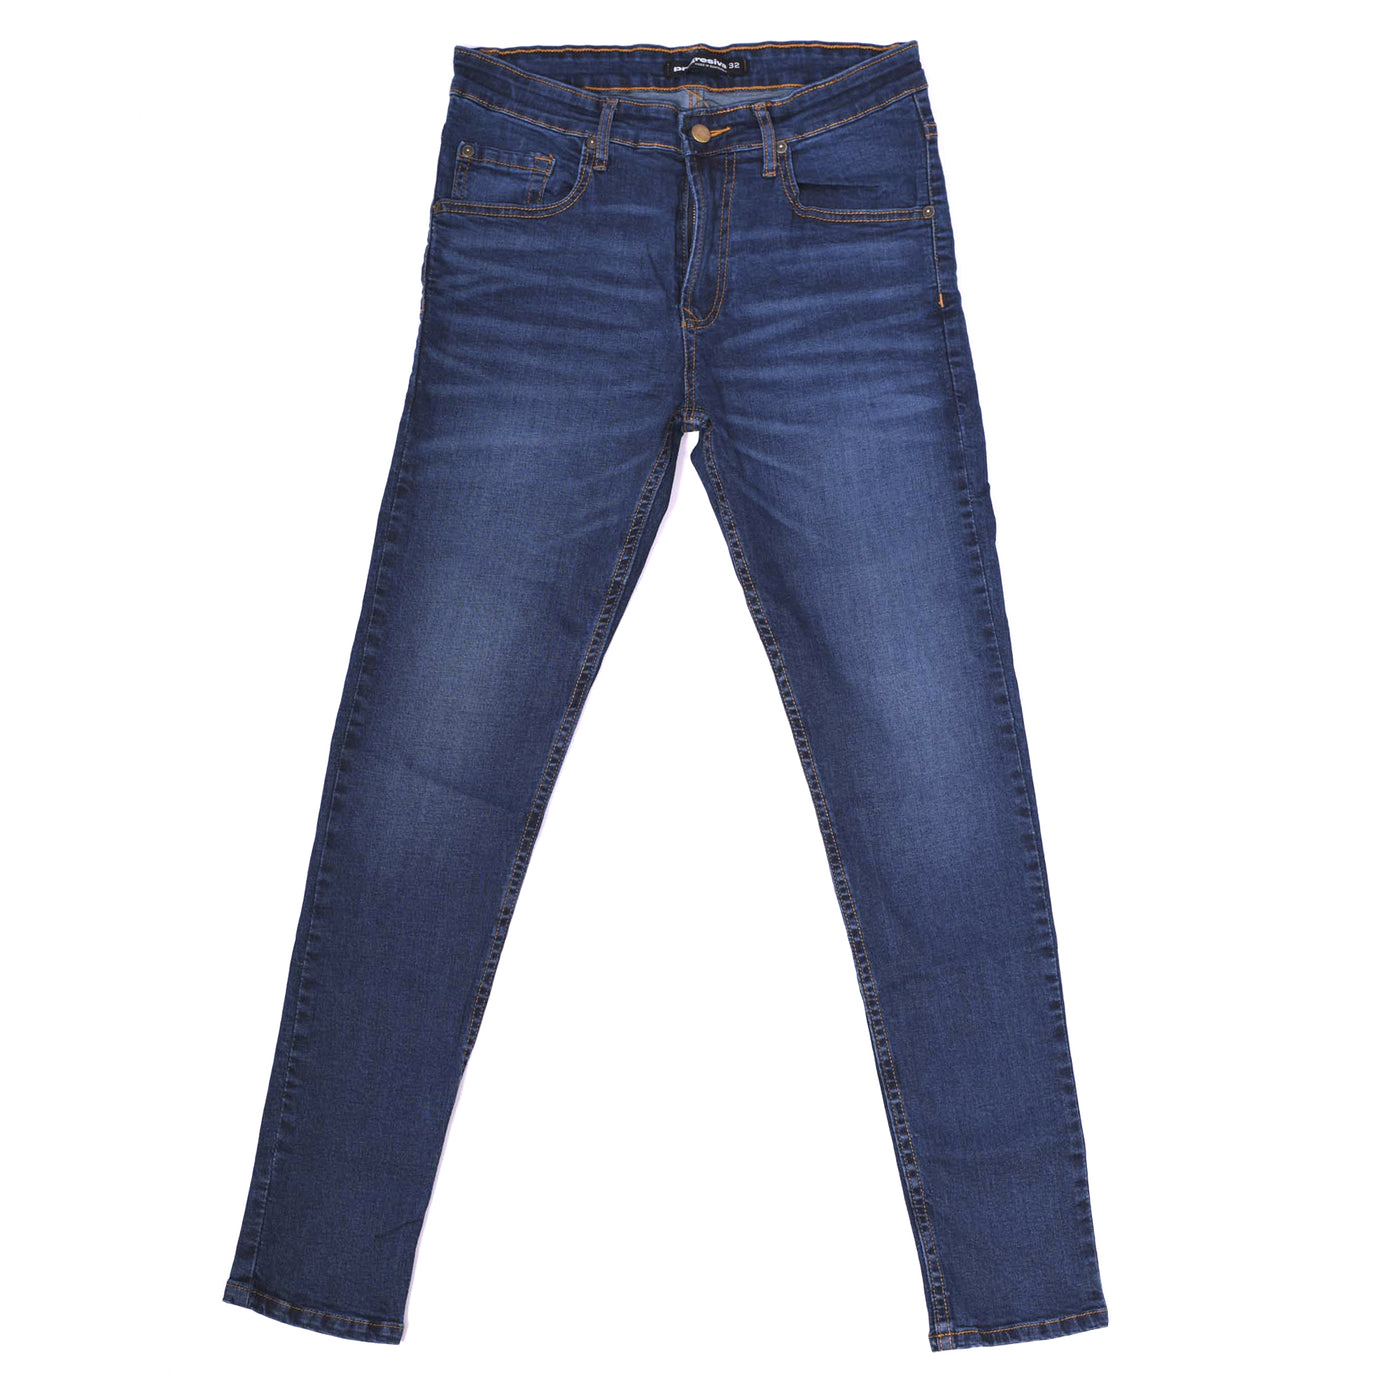 Jeans super denim - MAR DE PLATA - skinny